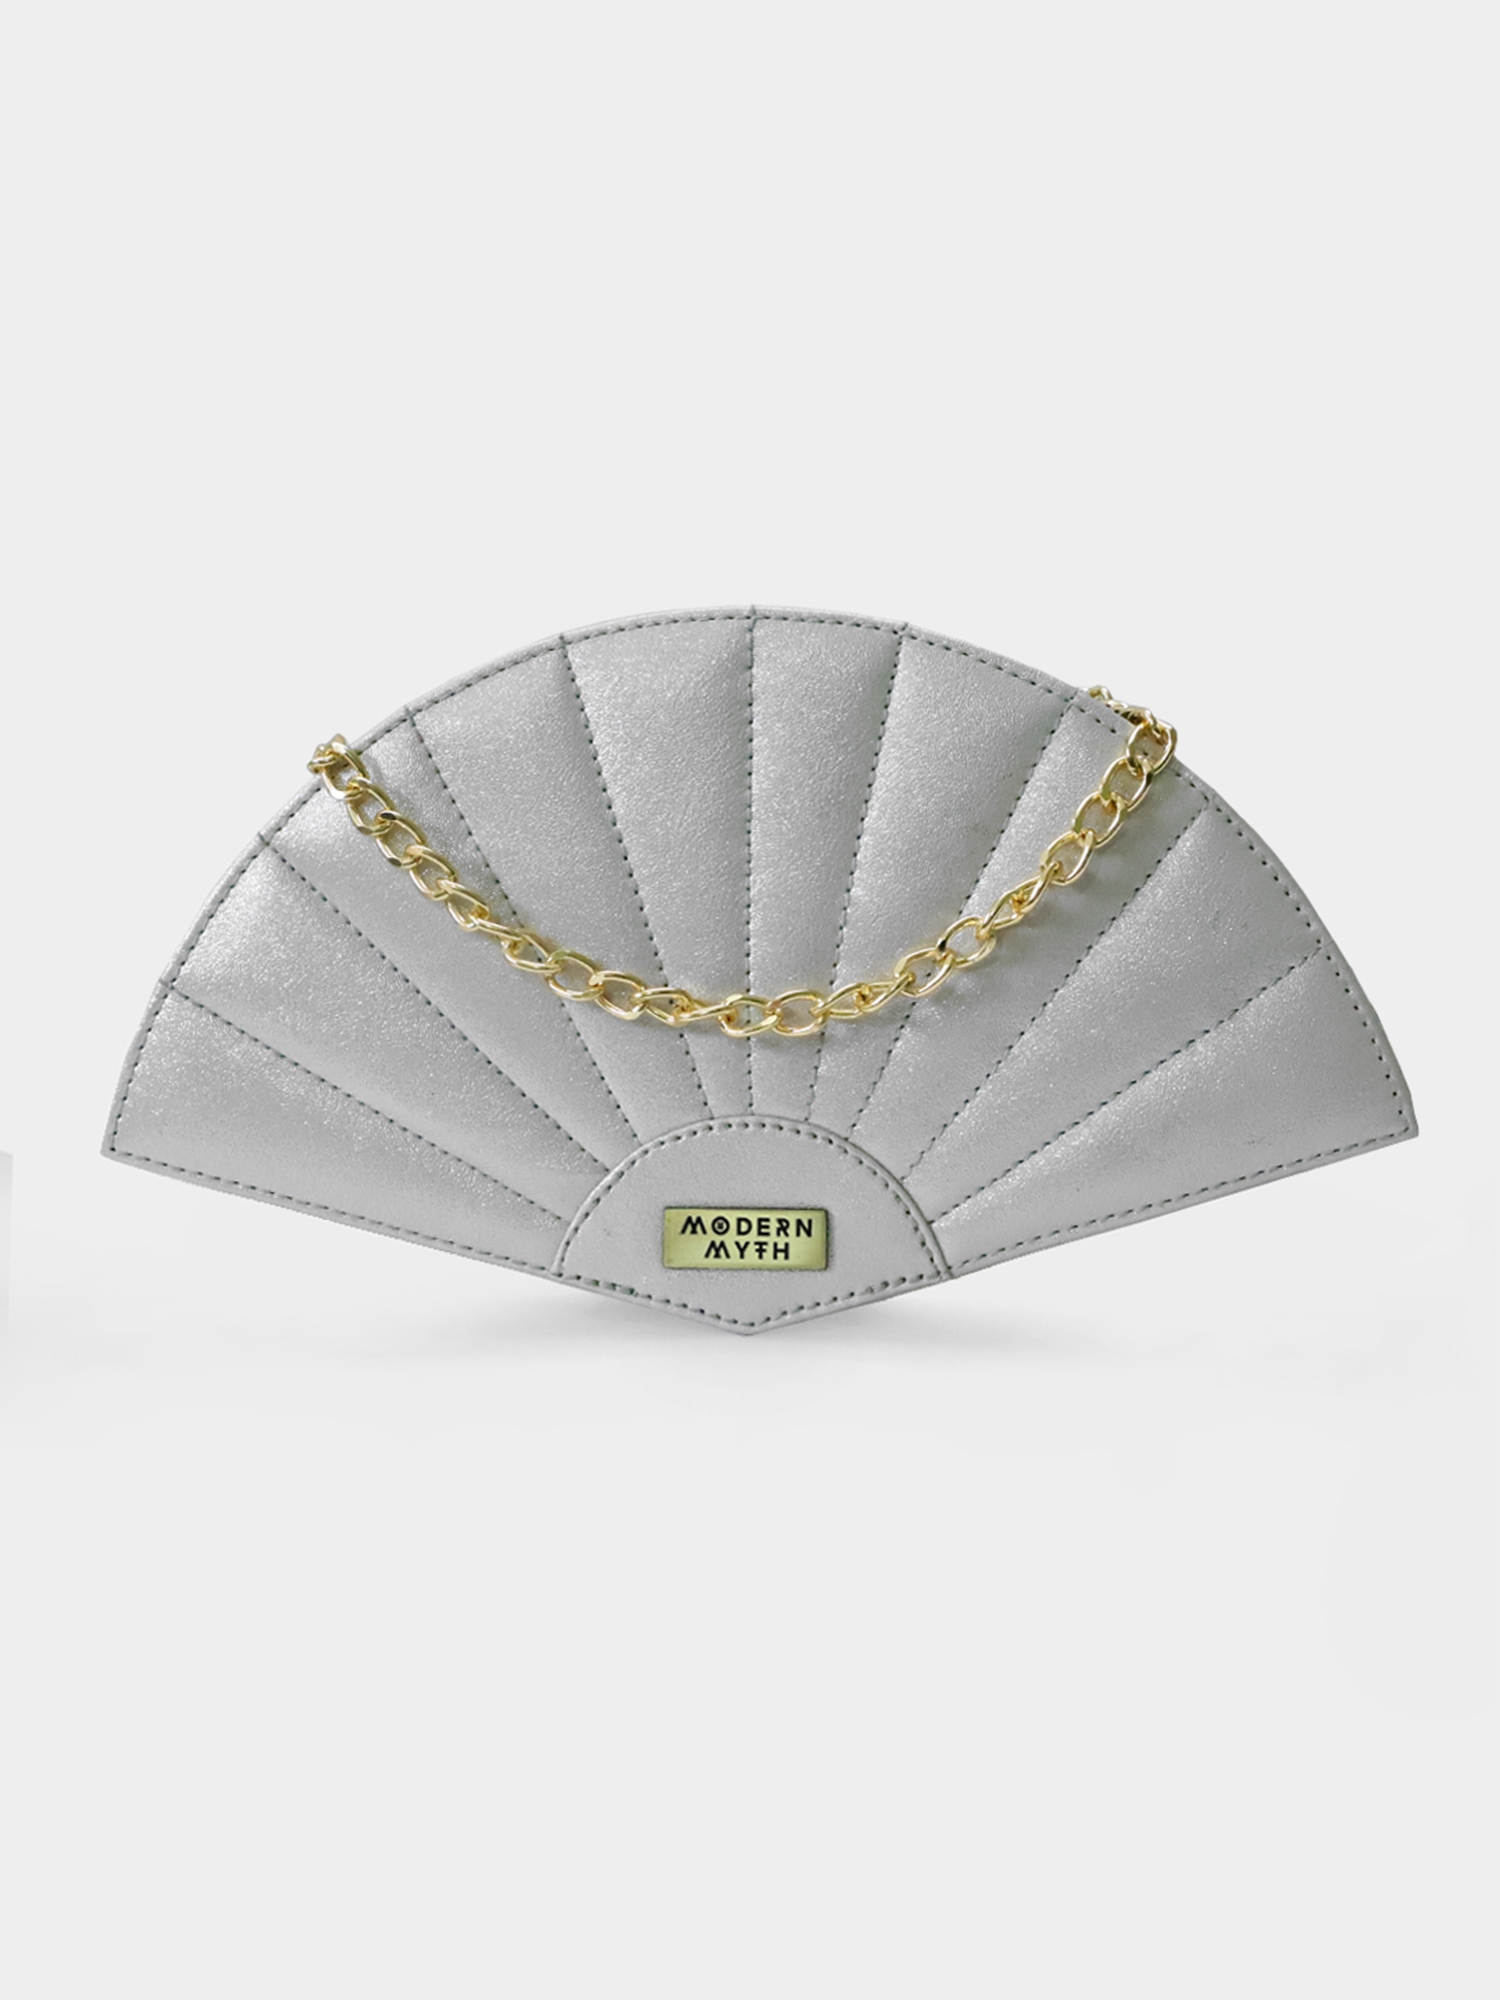 Modern Myth | Silver Plain Sling Bag